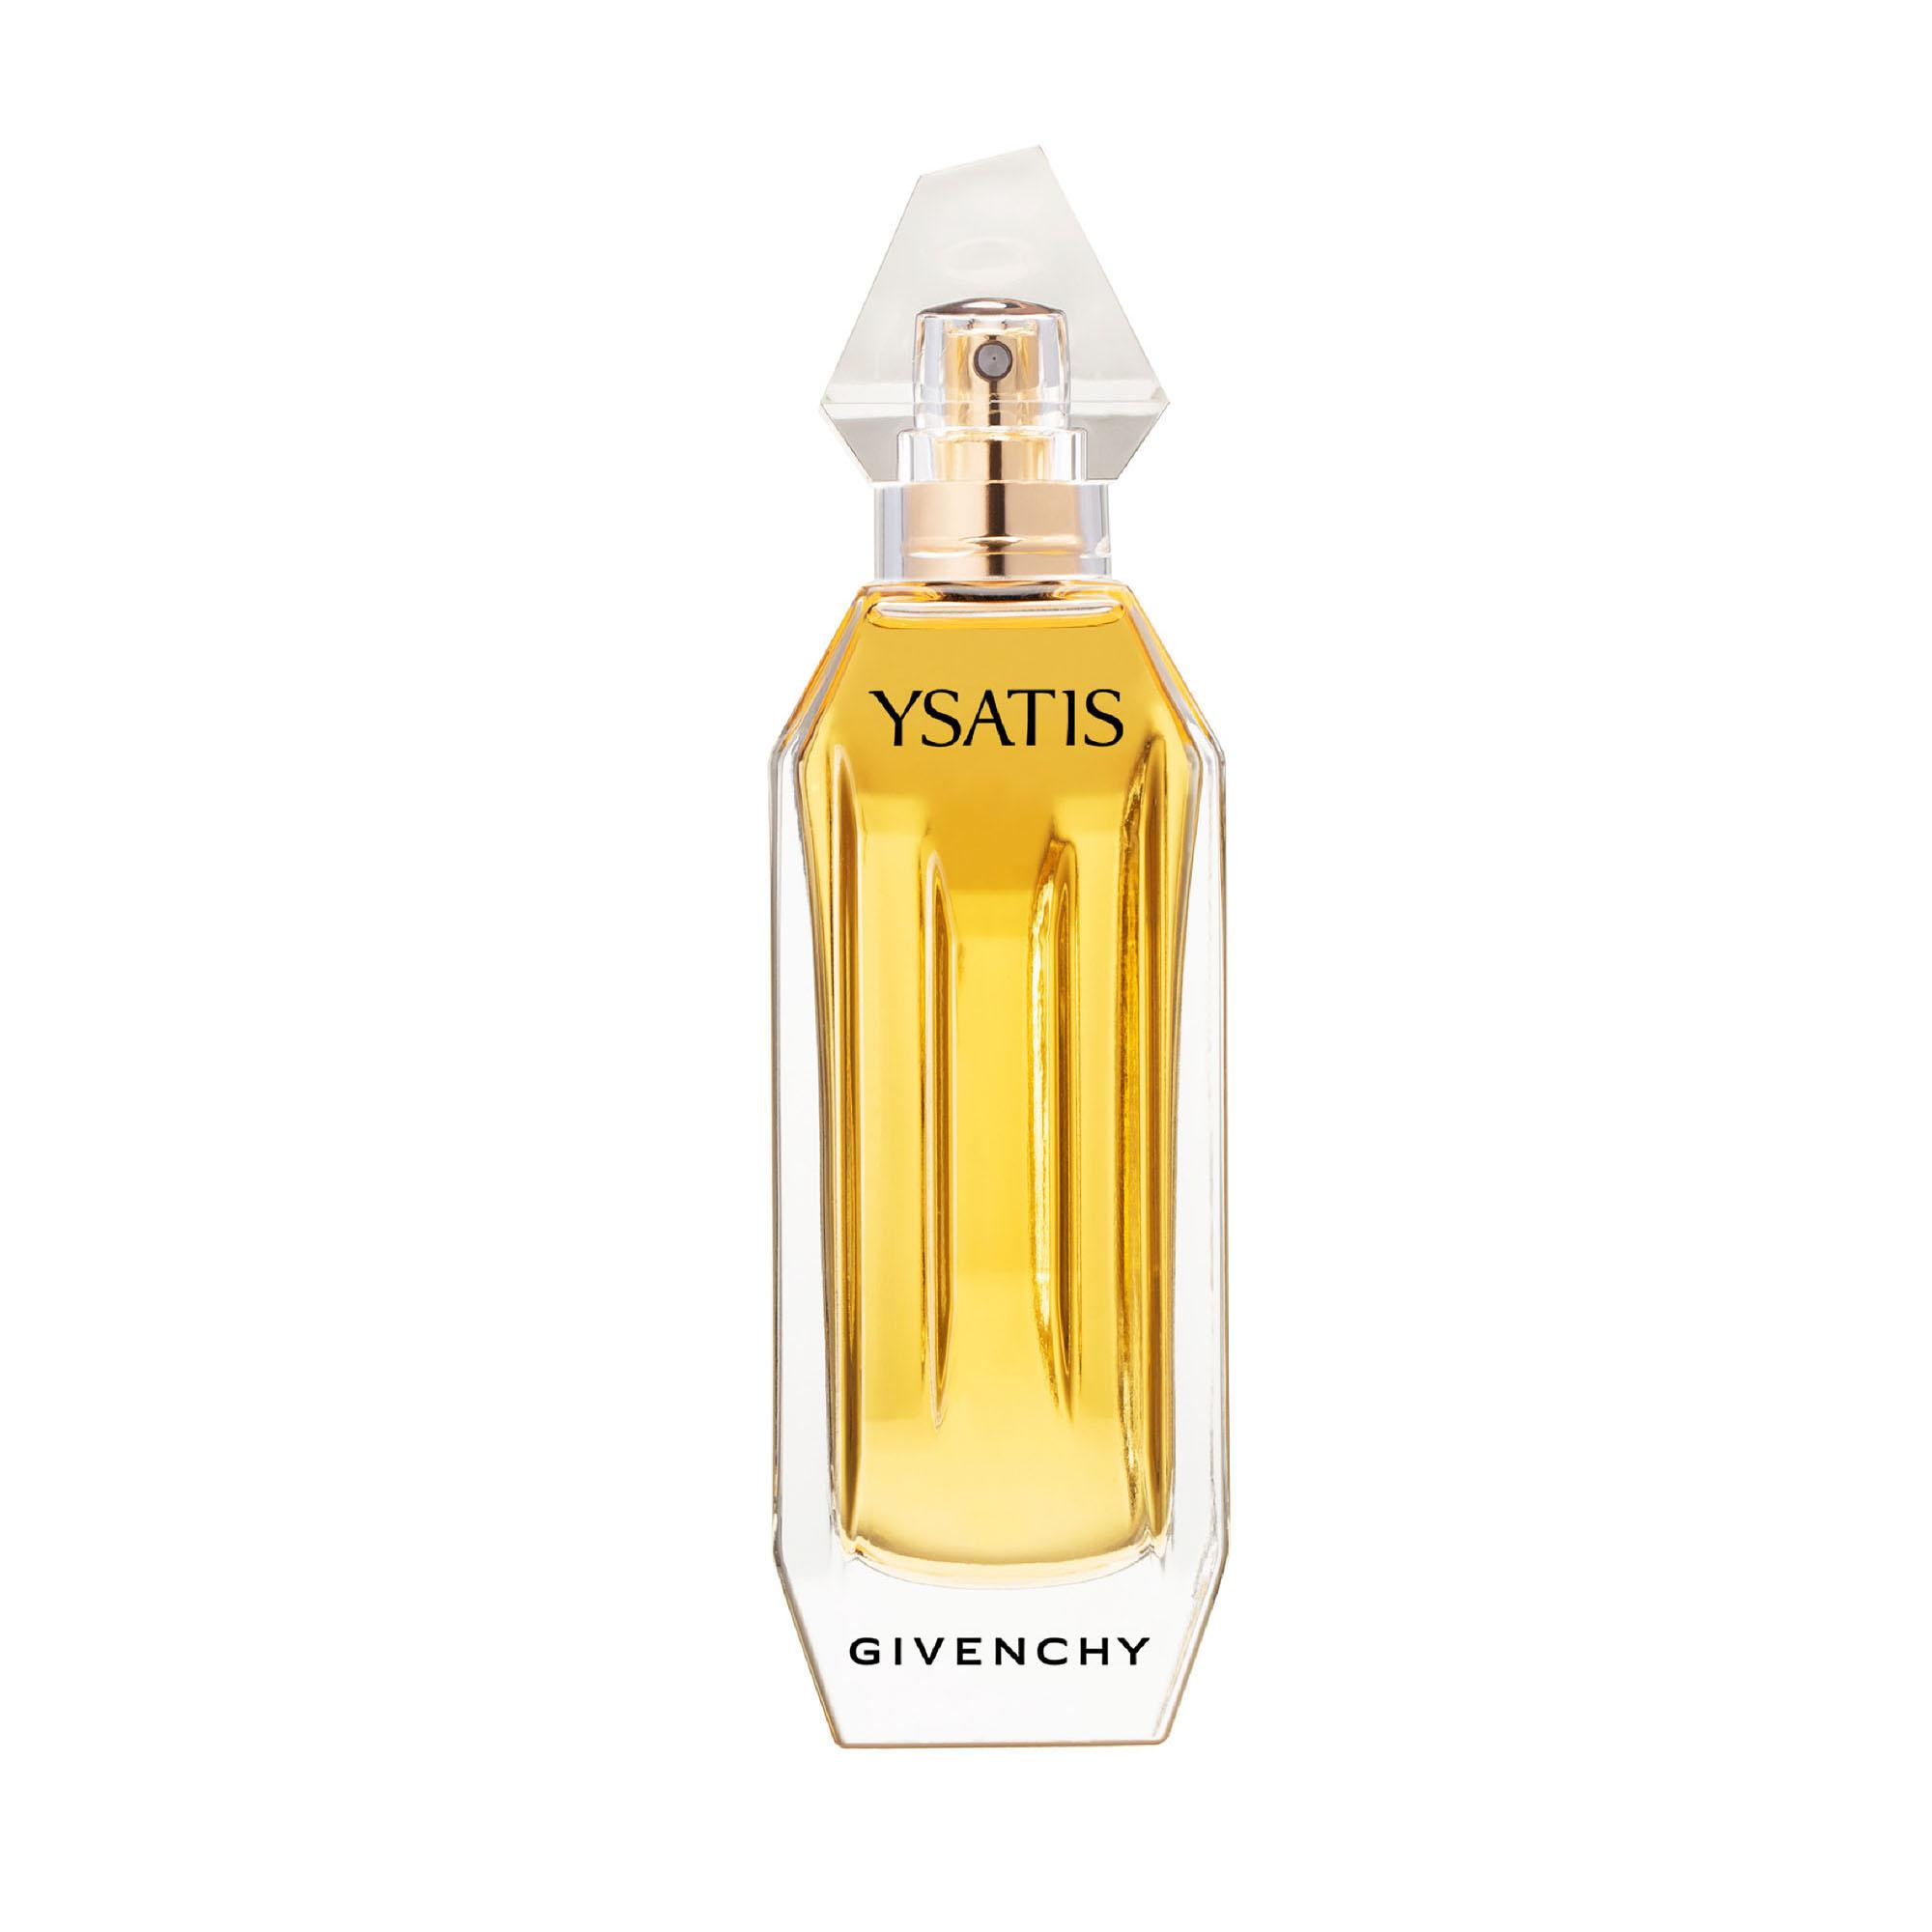 Givenchy Ysatis Eau de Toilette Spray 100ml TESTER | Your Perfume Warehouse